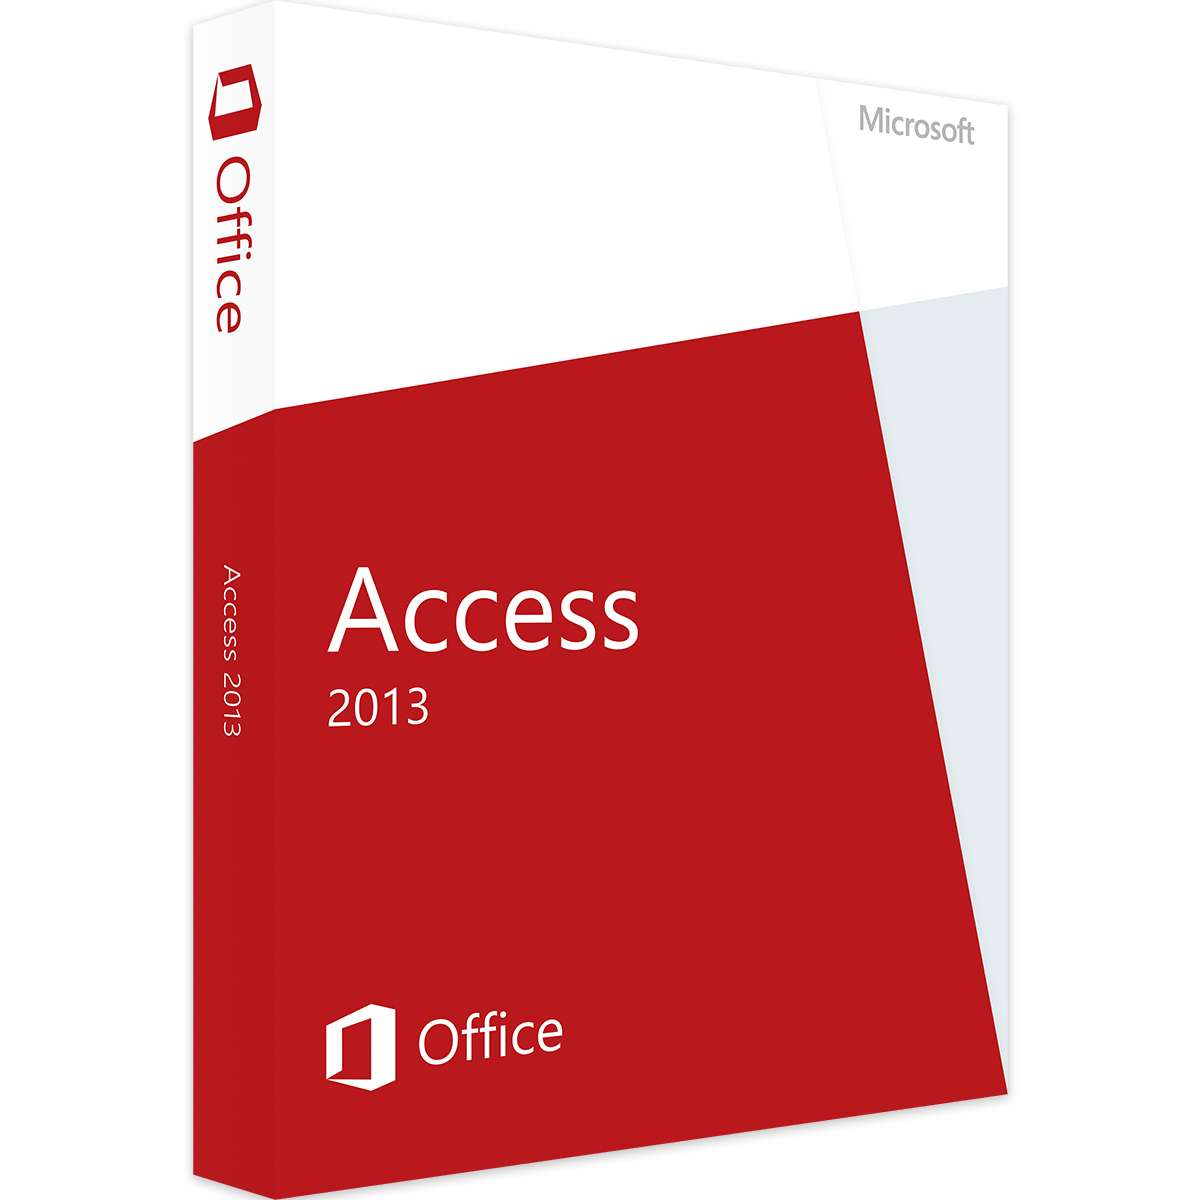 Office access. Access 2013. Microsoft access. MS access 2013. Microsoft Office access 2013.